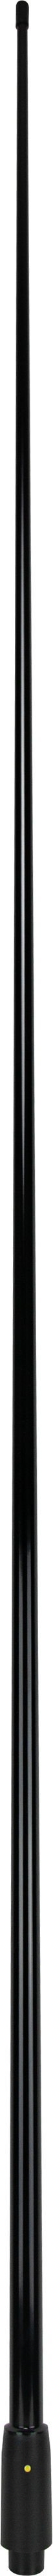 1800mm-vhf-detachable-antenna-whip---black